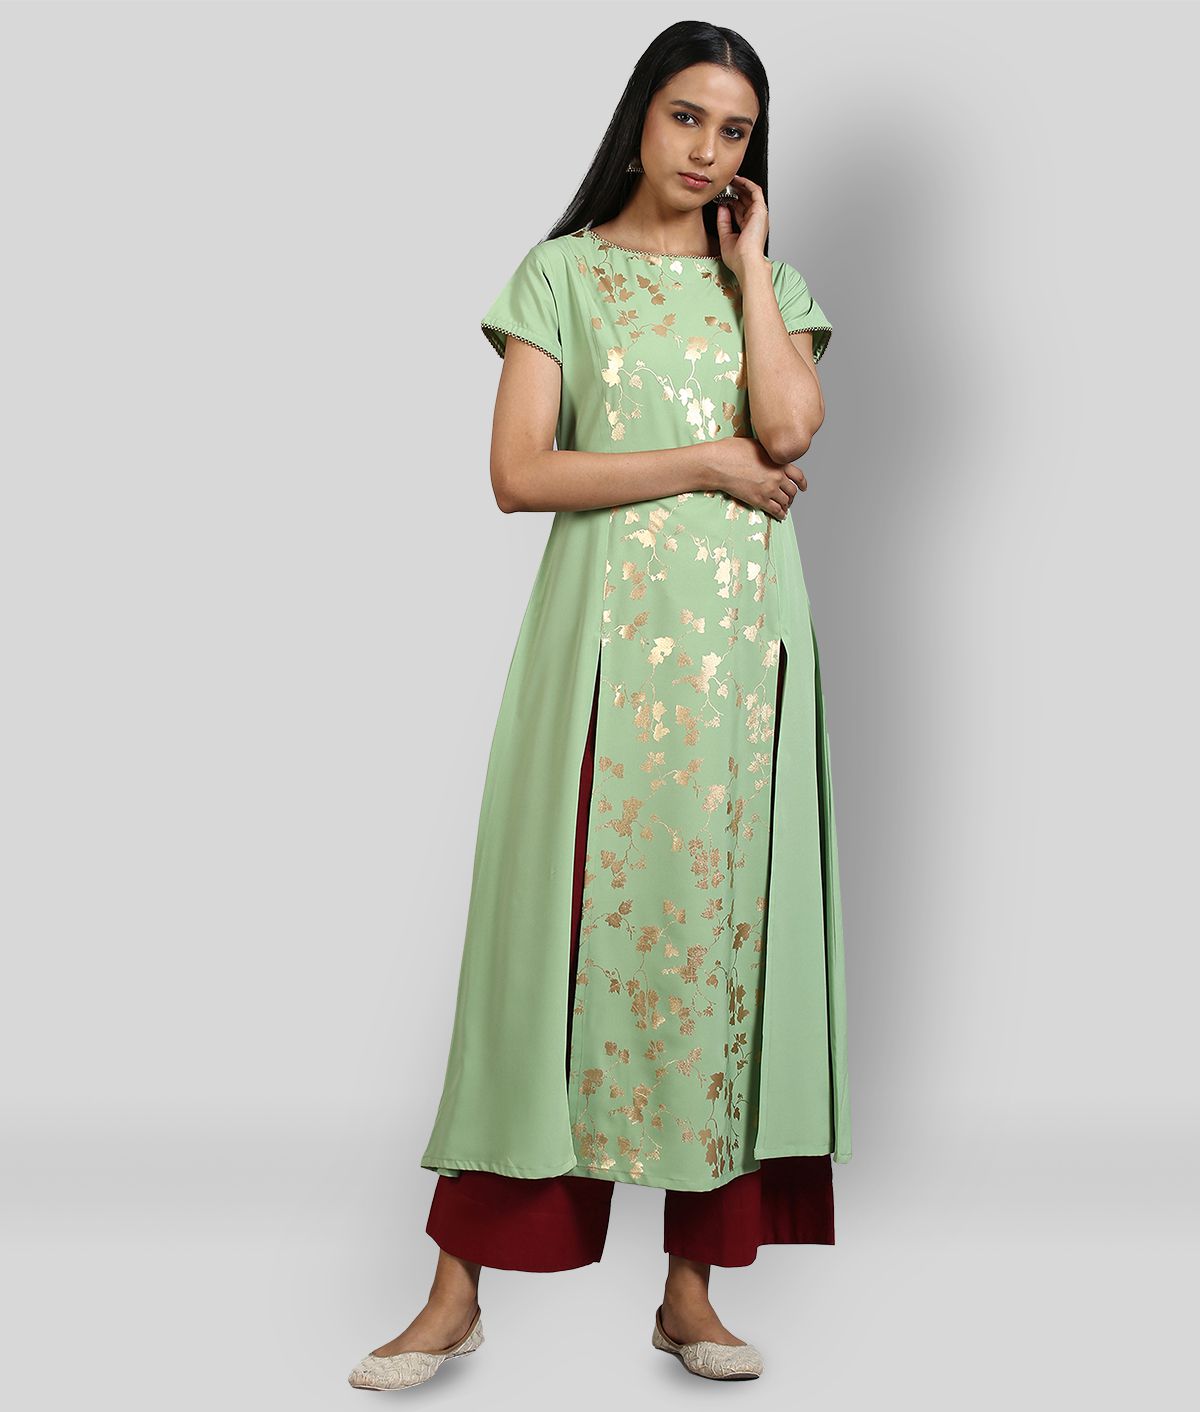 Janasya Indian Tunic Tops Crepe Kurti Women Green 